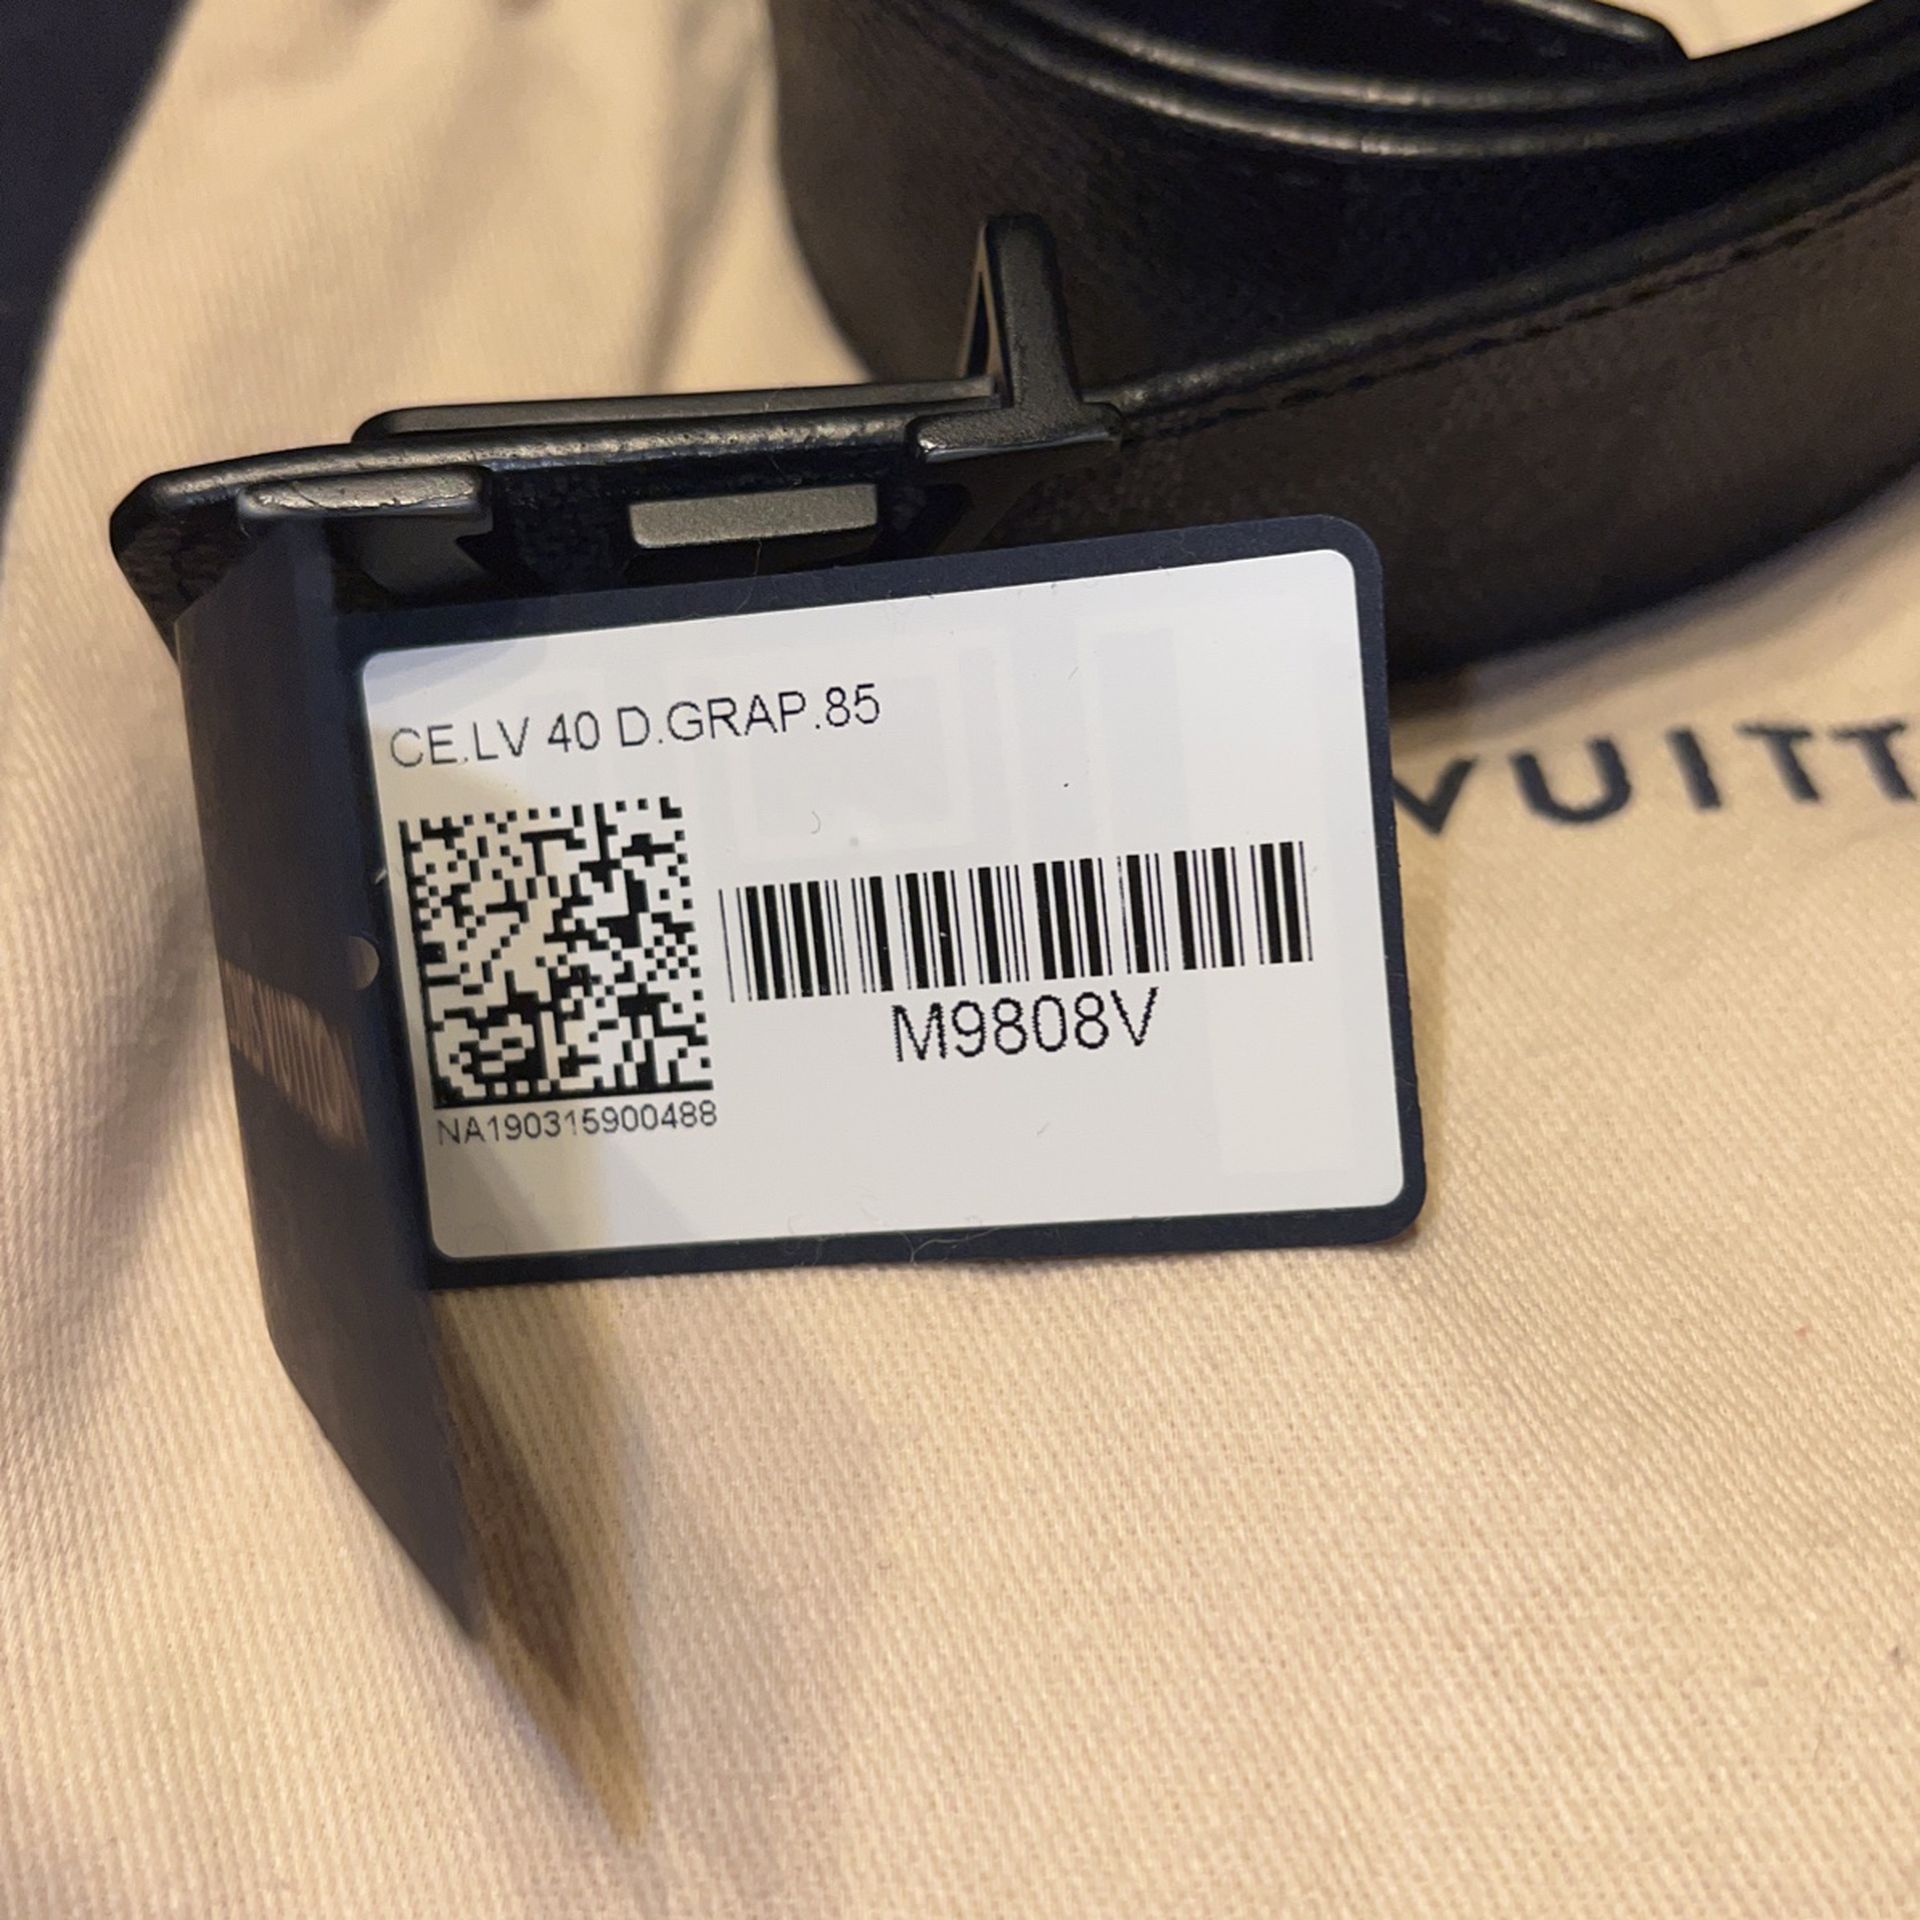 85/34 Louis Vuitton belt for Sale in Ypsilanti, MI - OfferUp